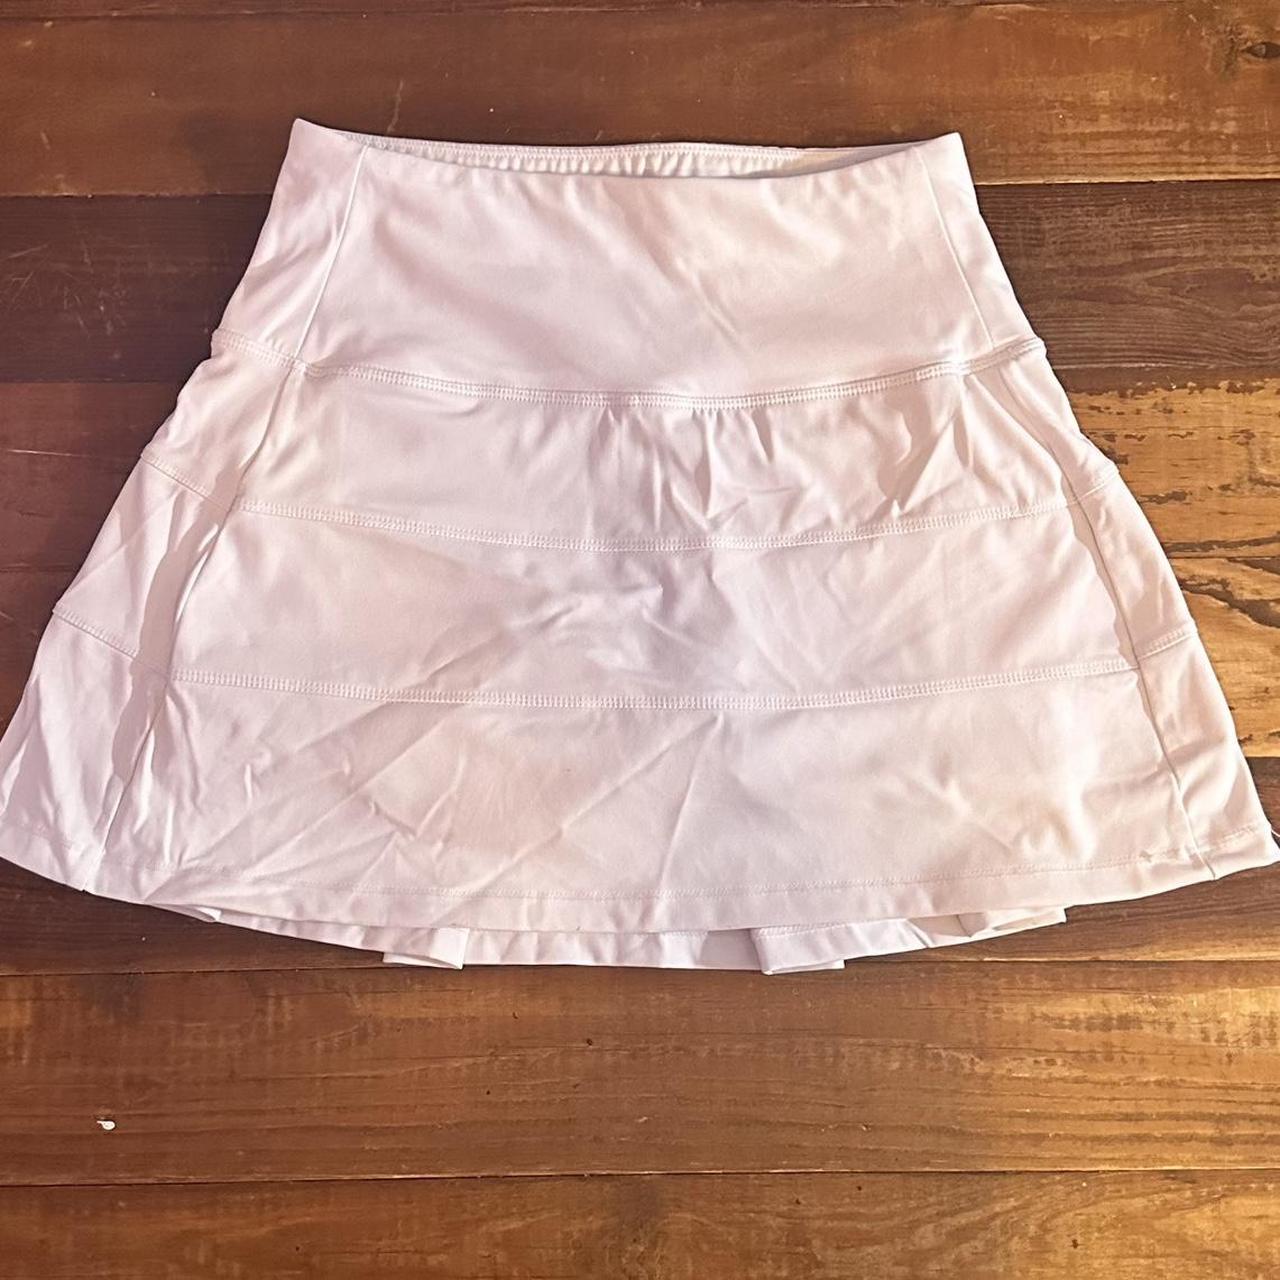 Tennis Skirt Pace Rival Look Alike skirt Size: US... - Depop